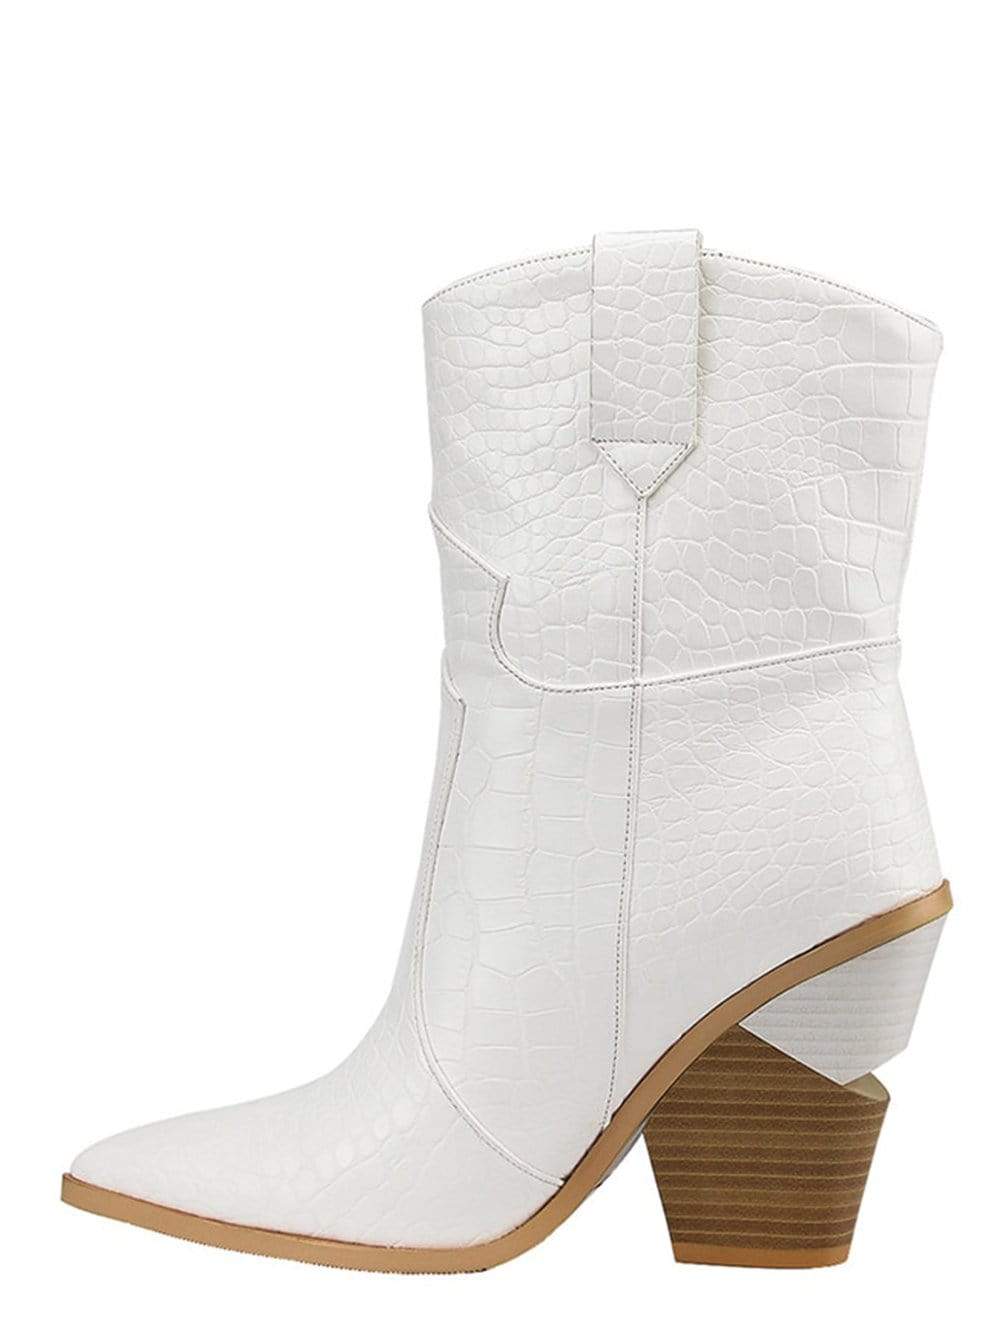 Cutwalk Mid Boot in White